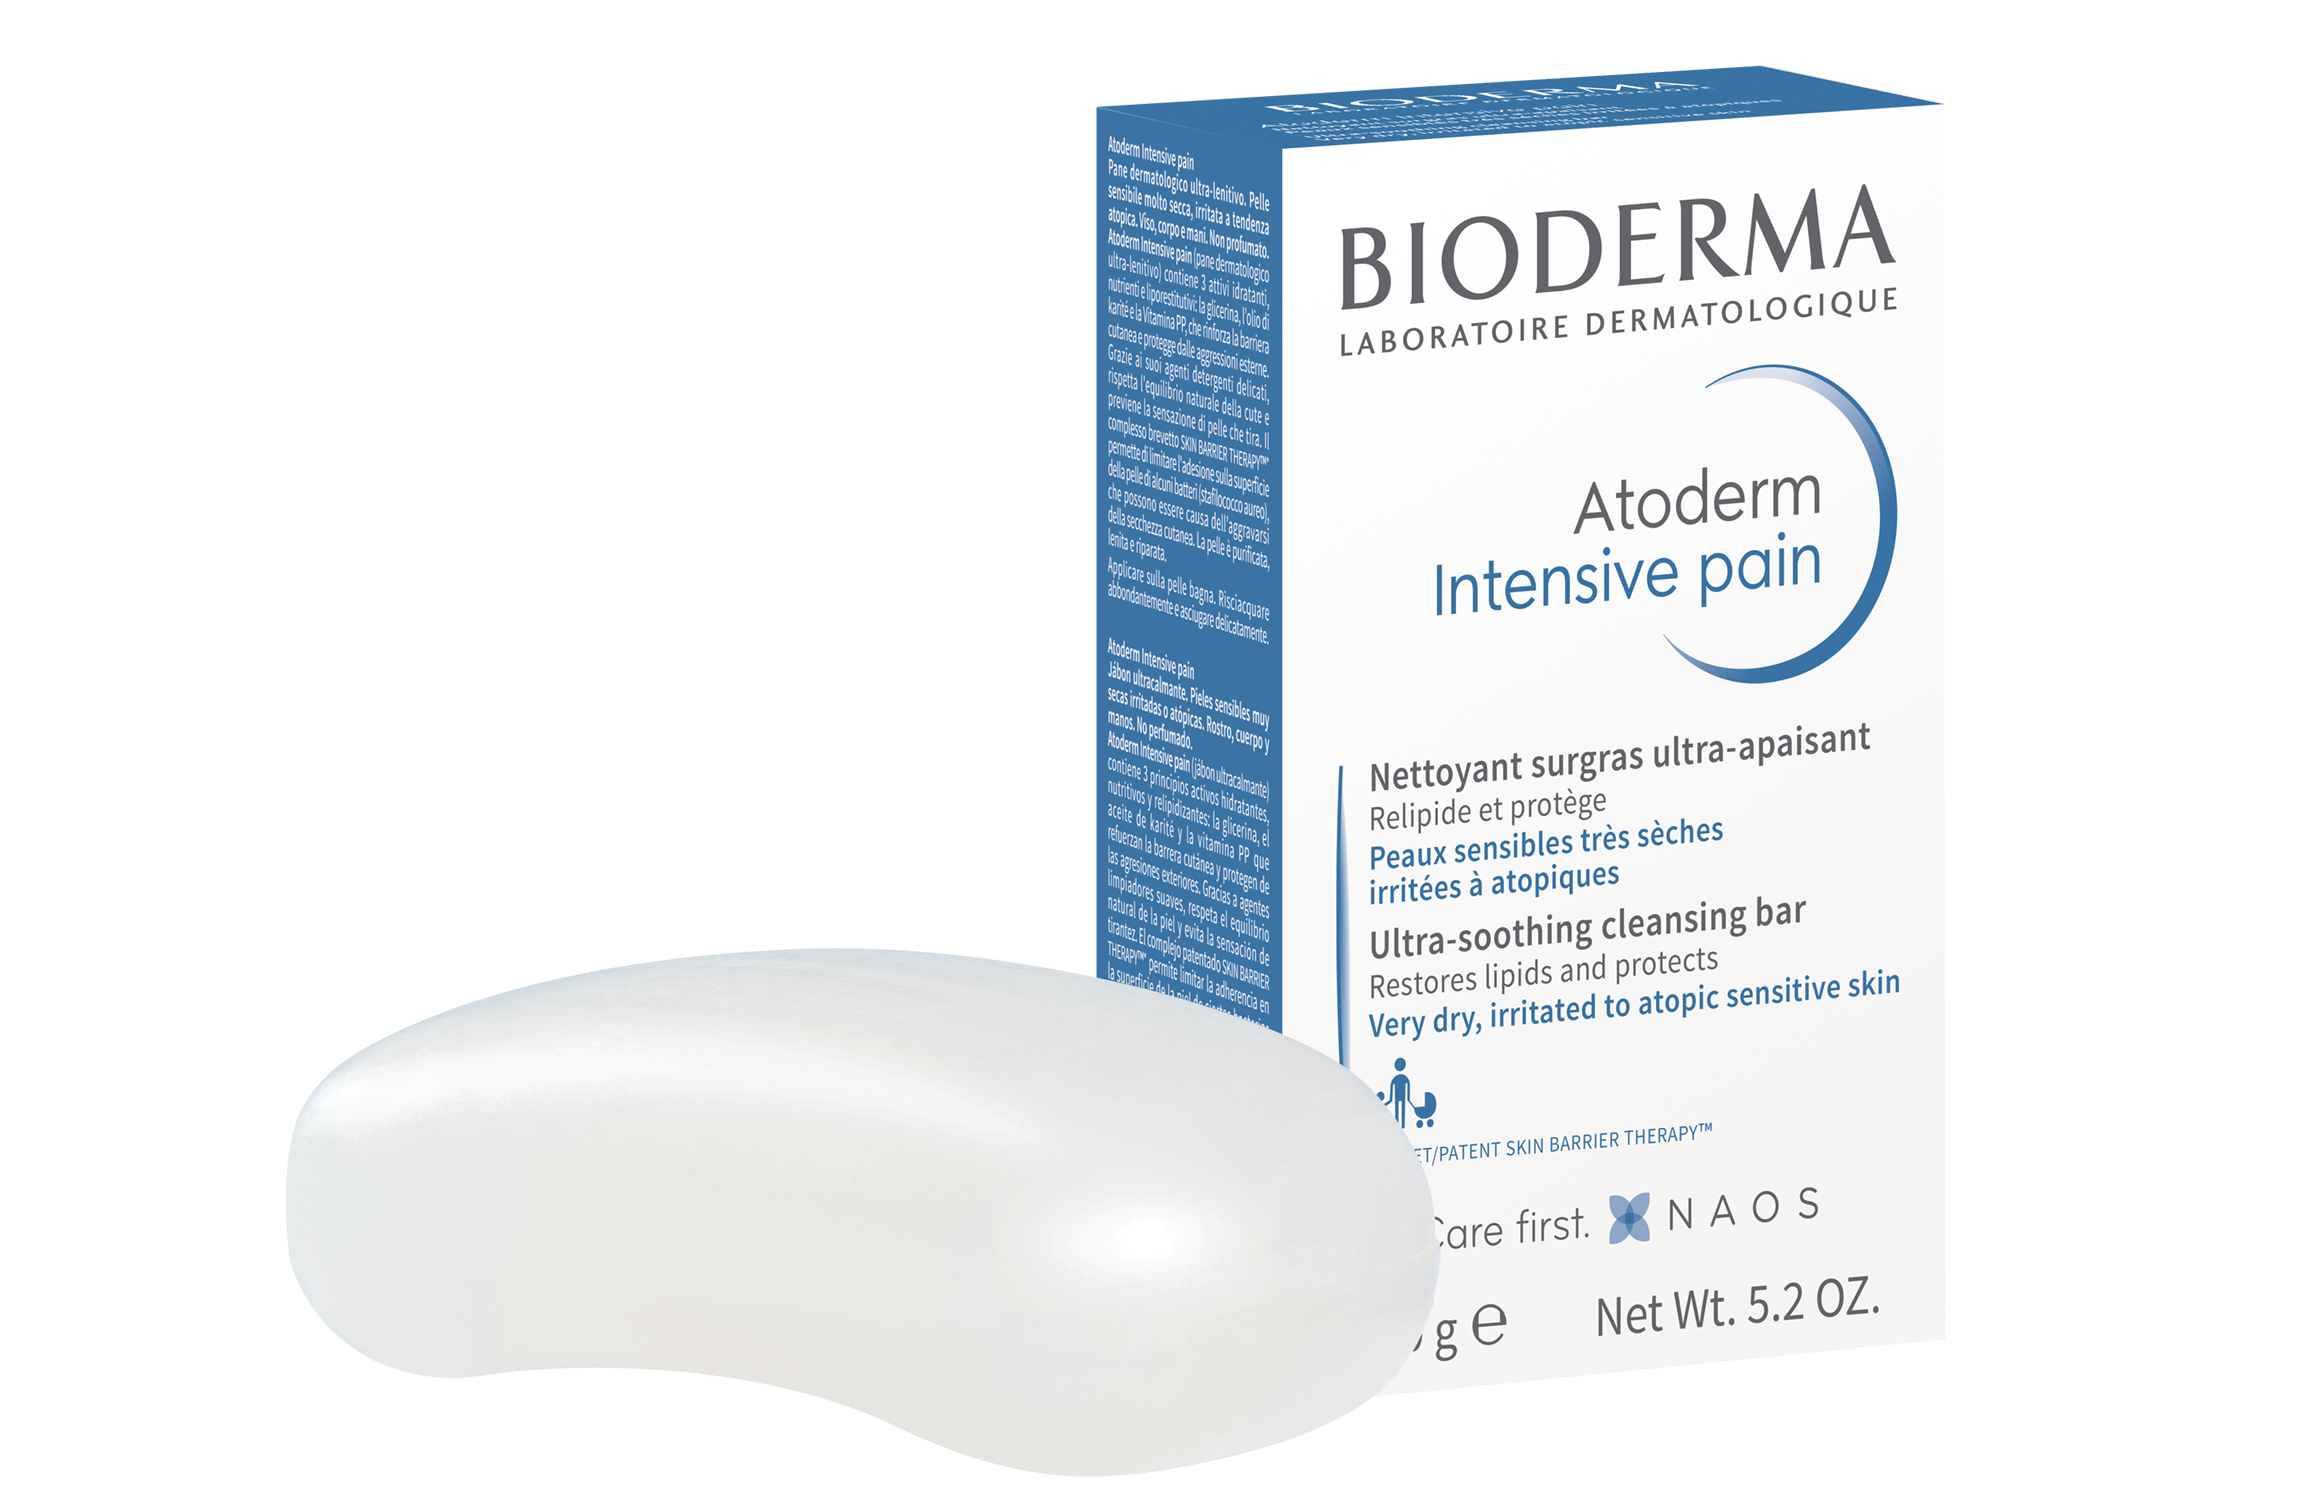 Piele cu probleme - Bioderma Atoderm sapun 150g, epastila.ro